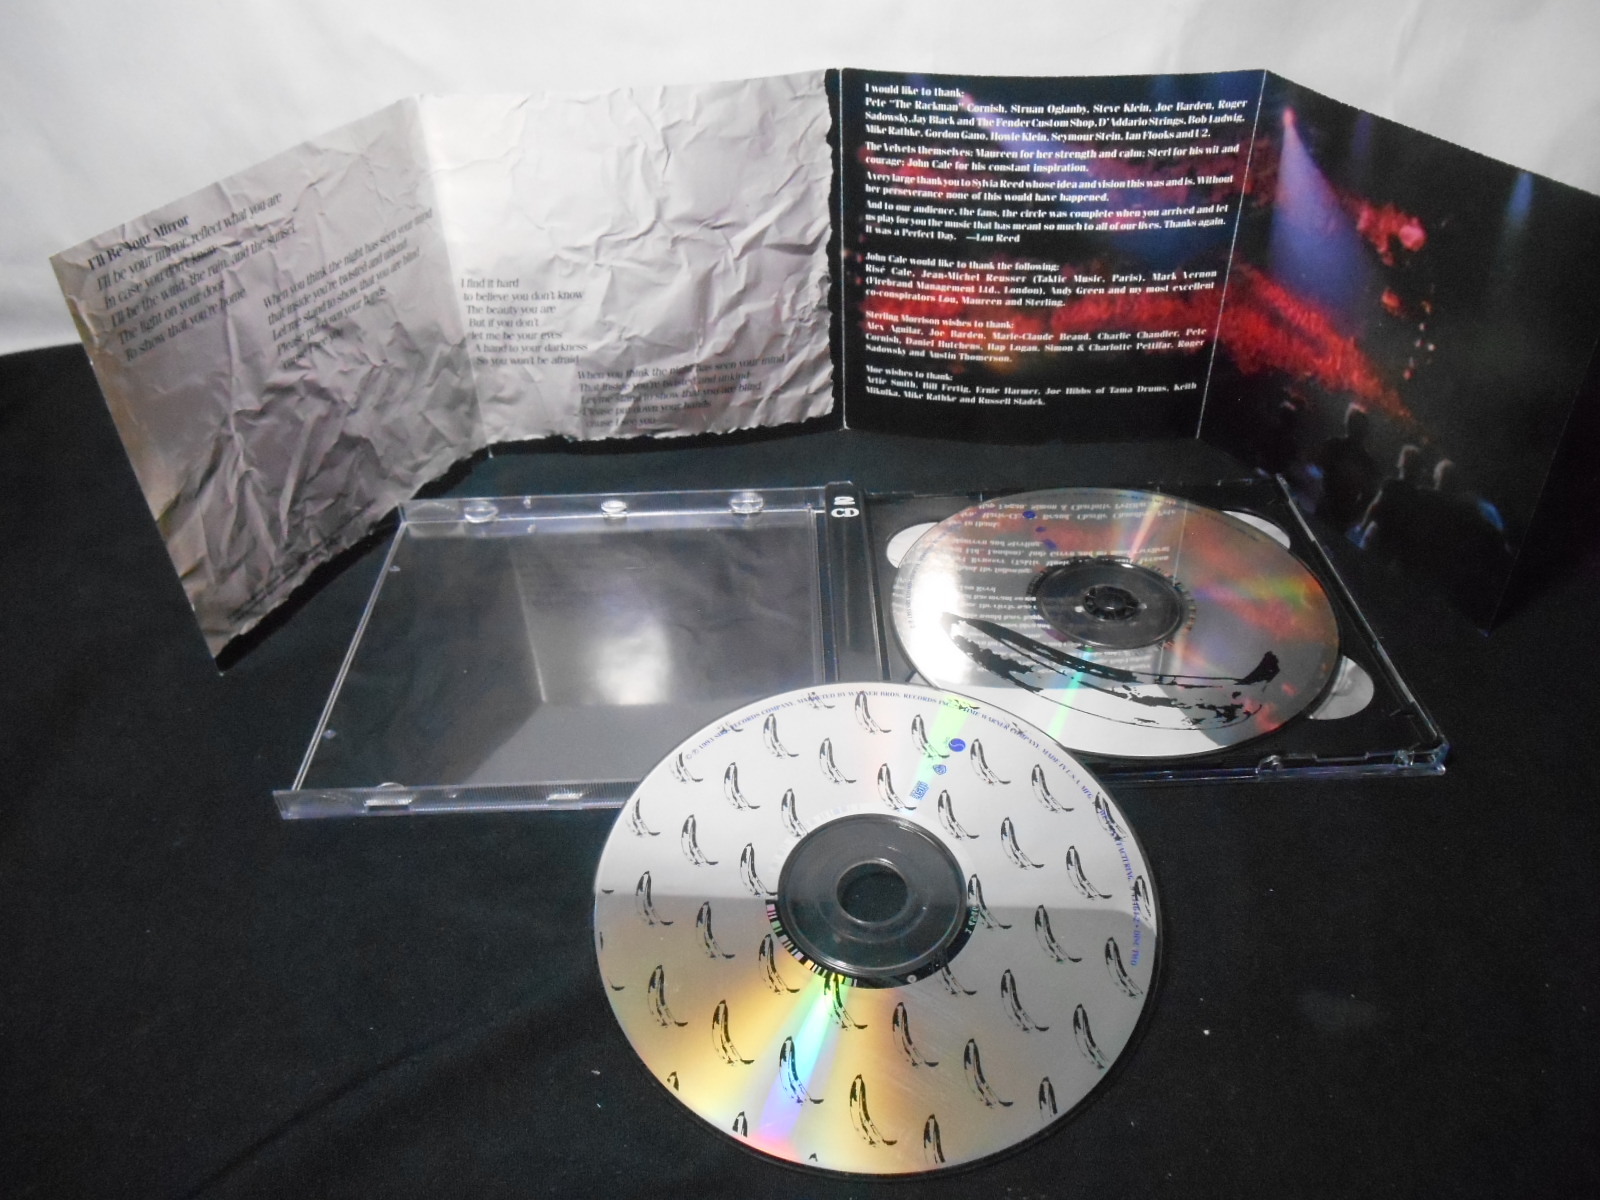 CD - Velvet Underground the - Live MCMXCIII (Duplo/USA)